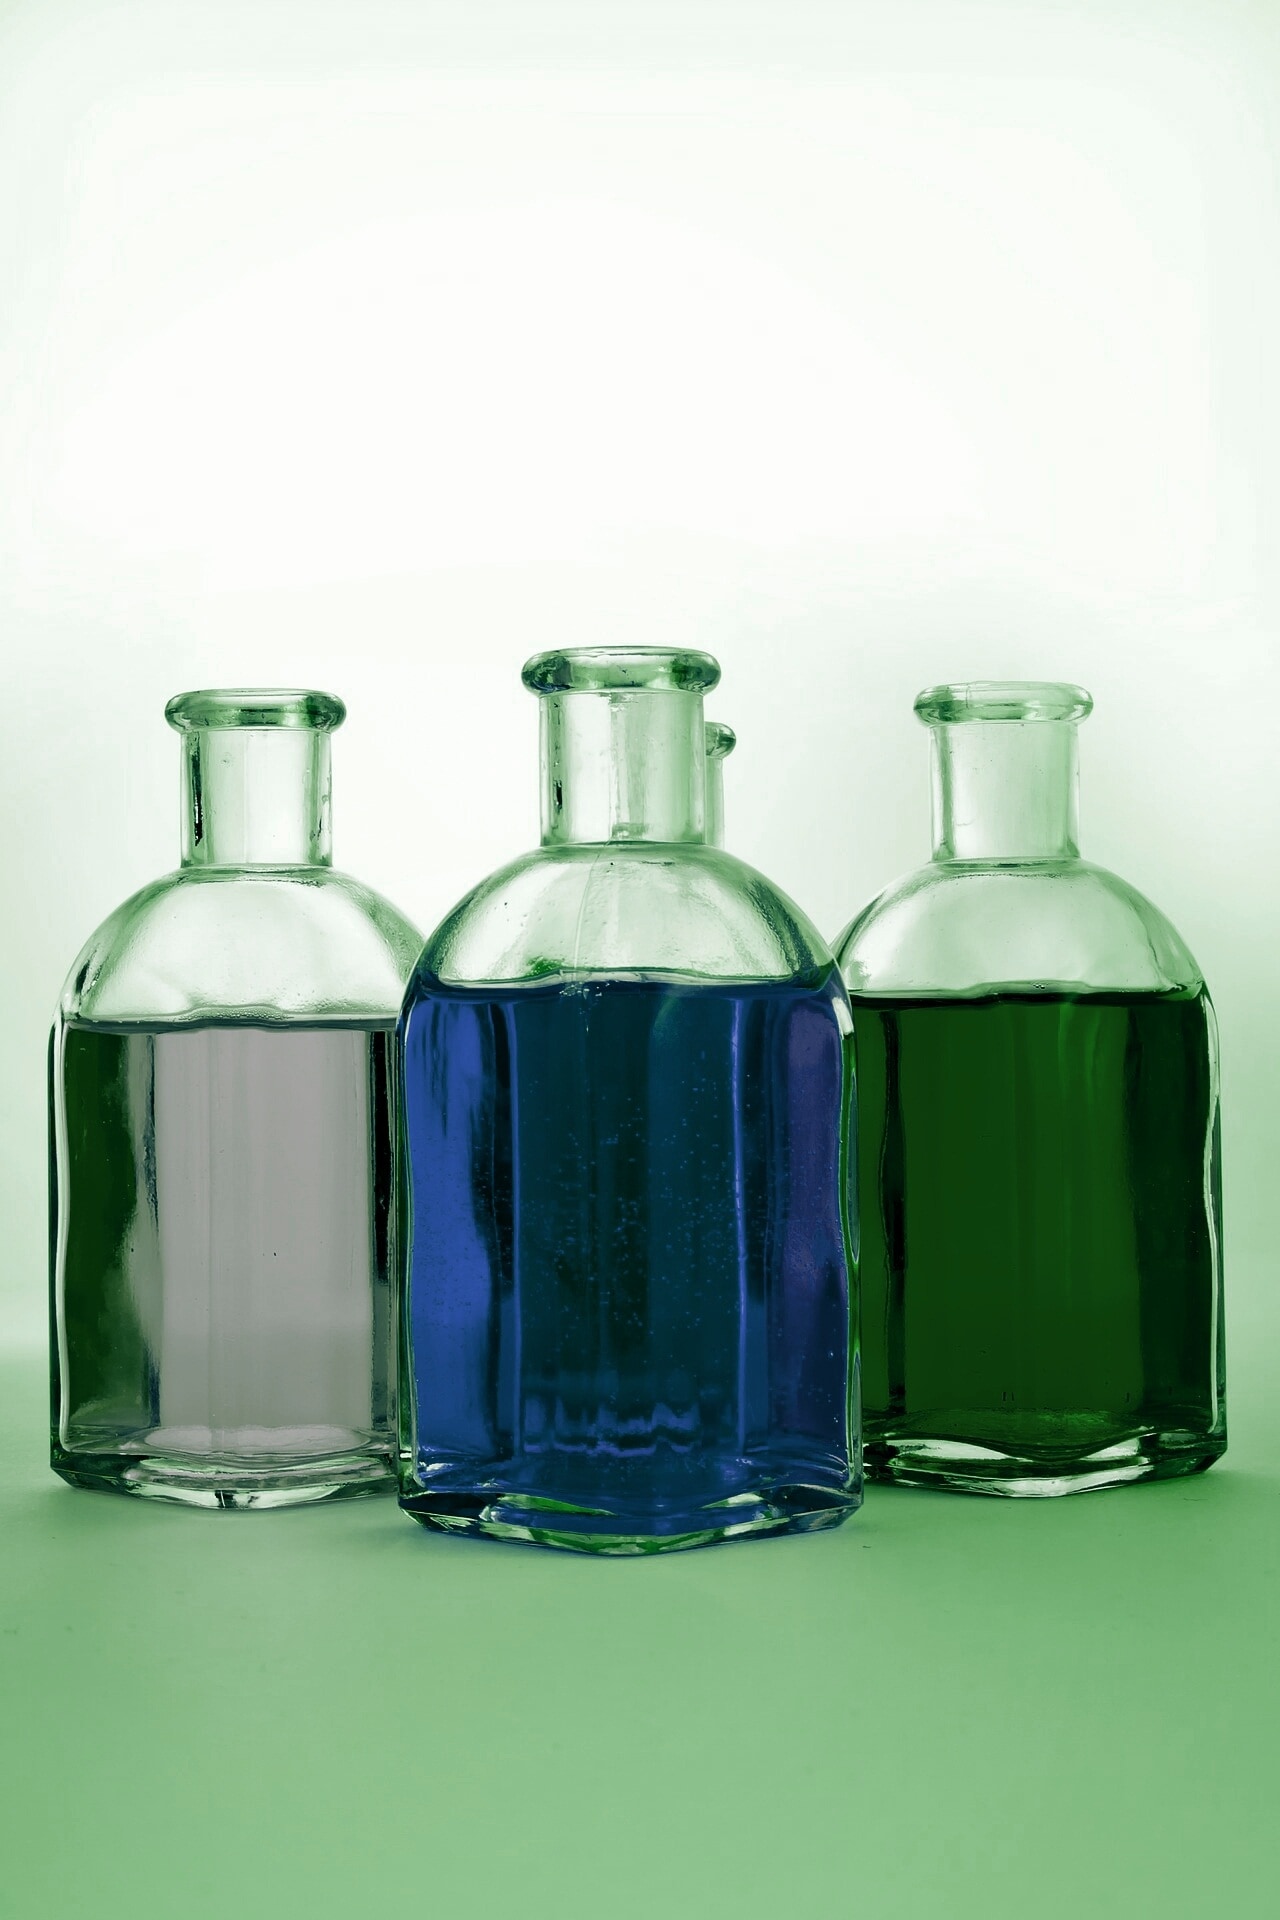 3 clear glass bottles